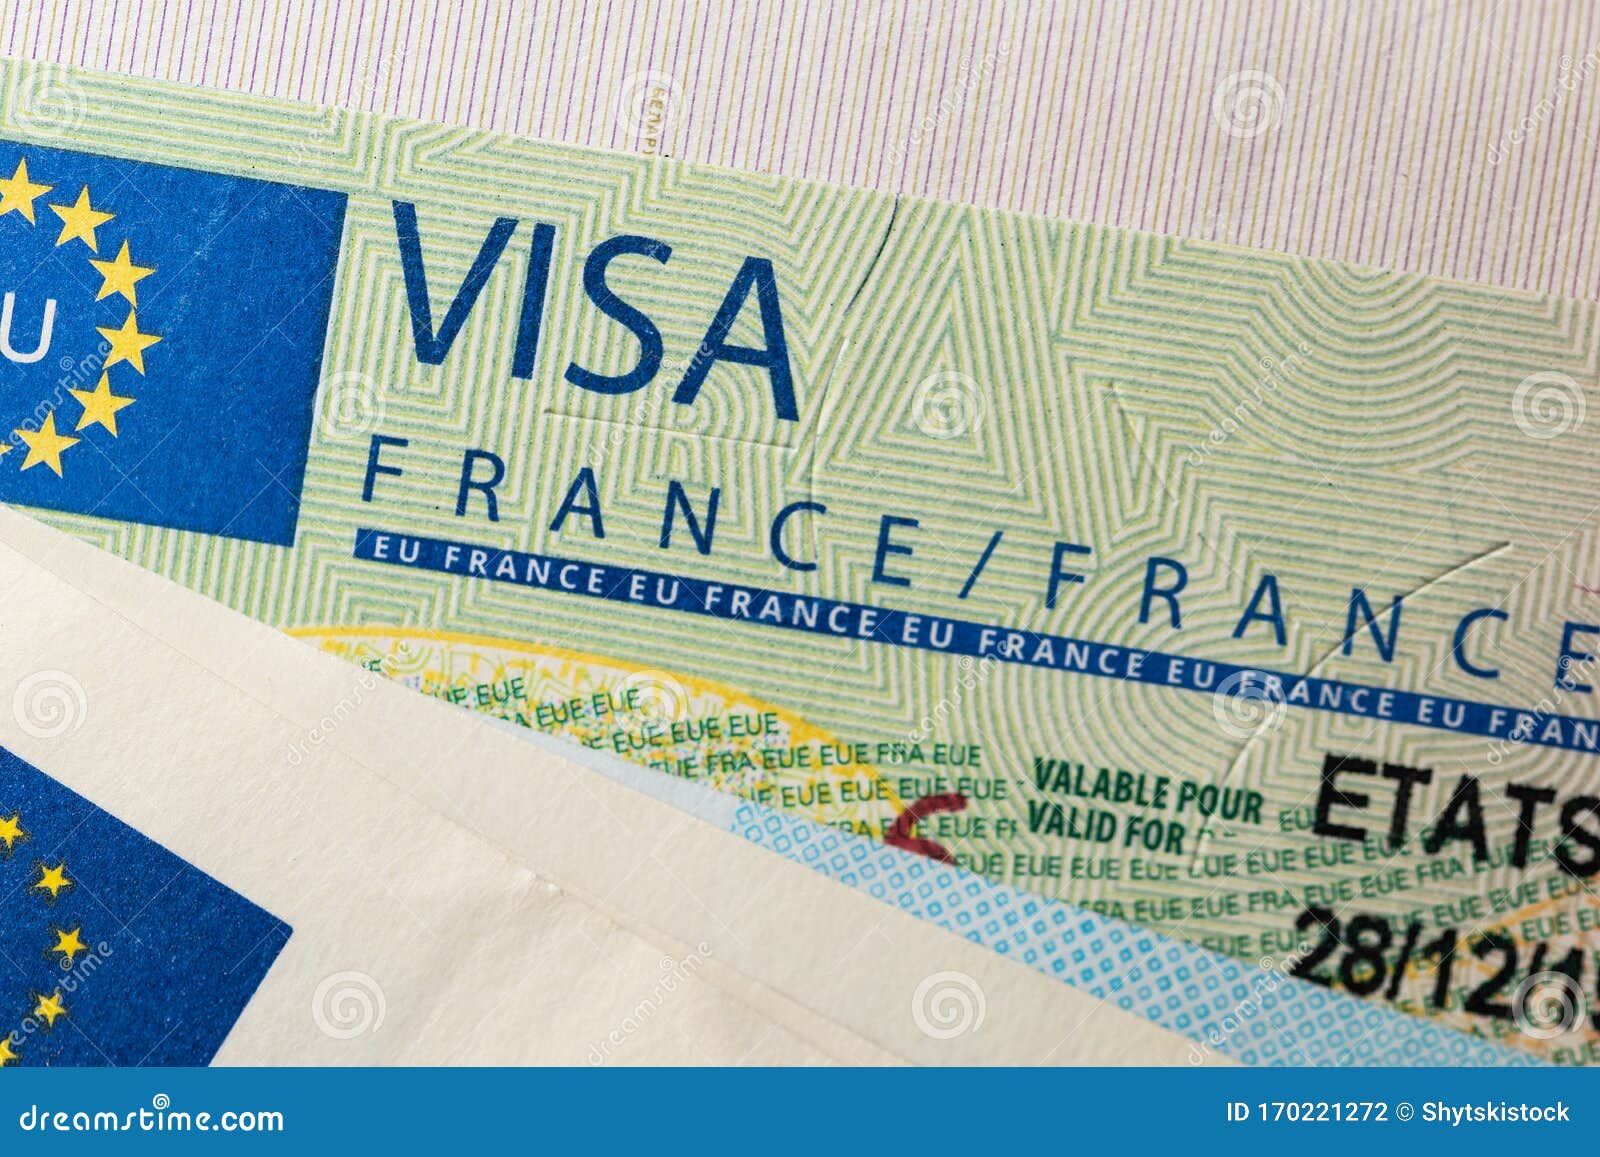 visa european travel